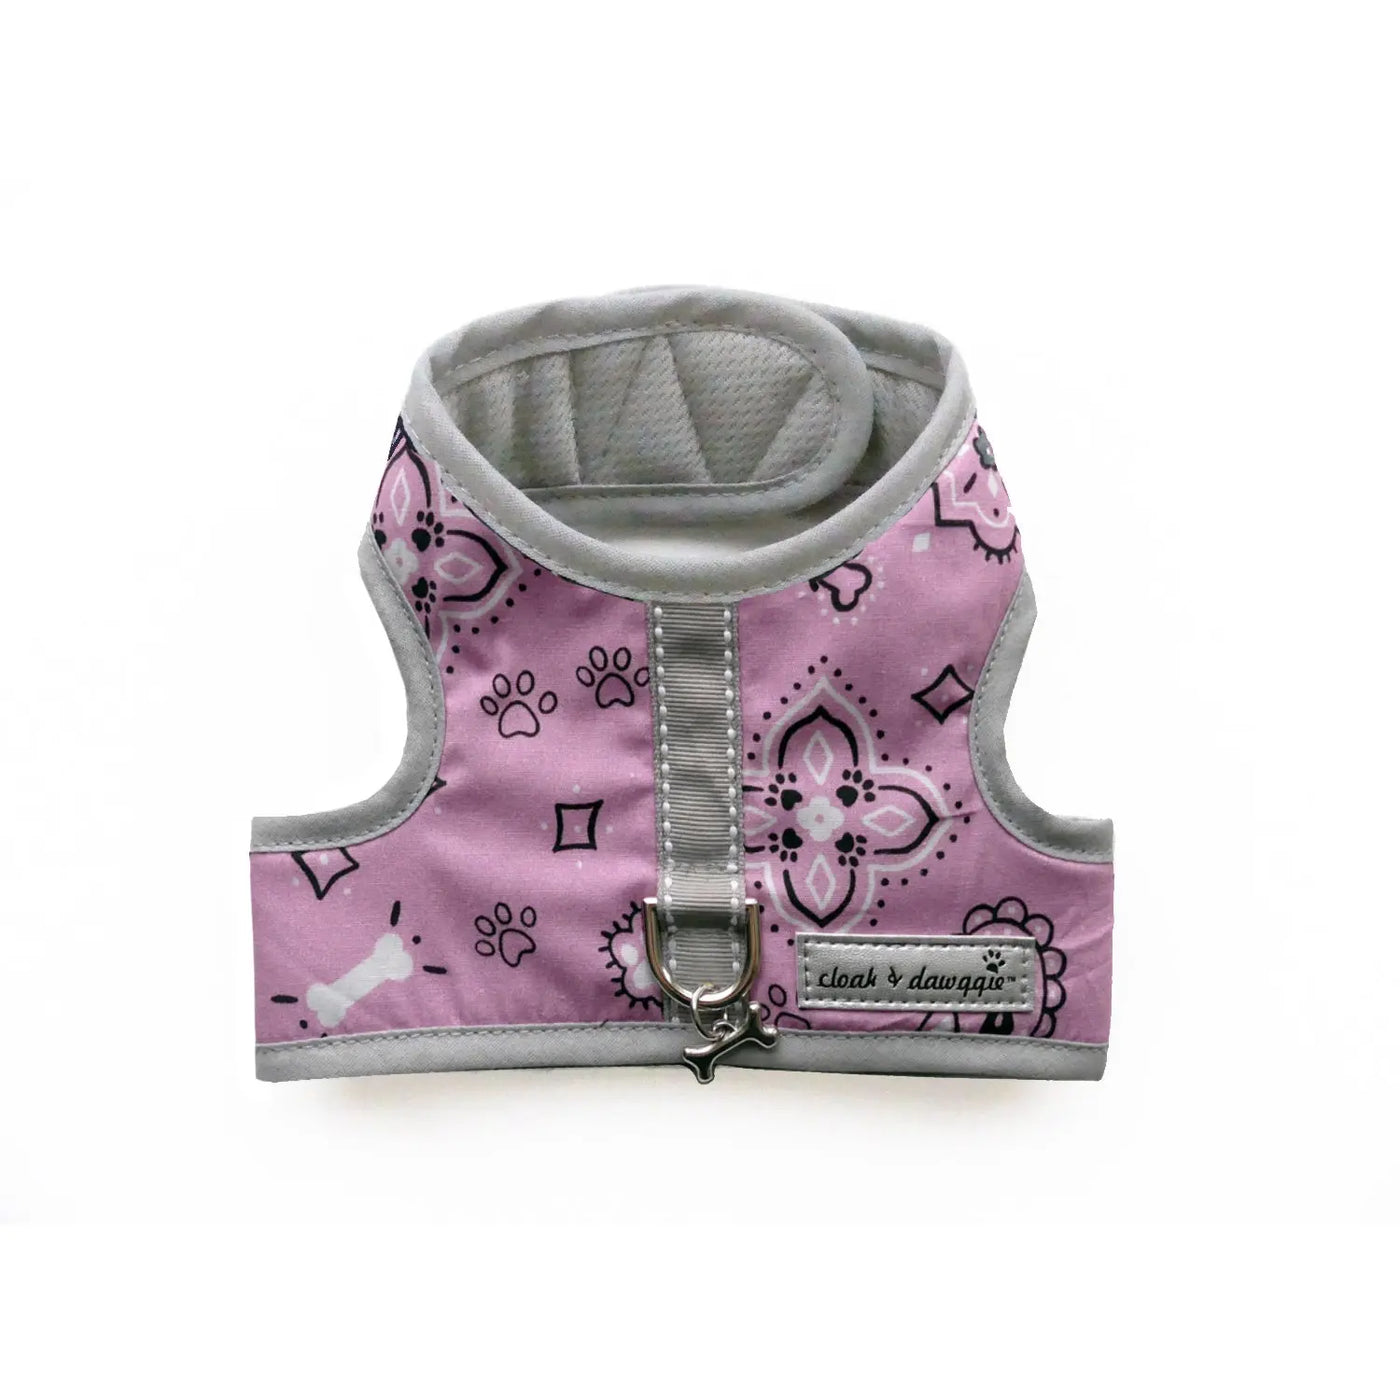 Pink bandana print dog harness vest cloak and dawggie xxs teacup